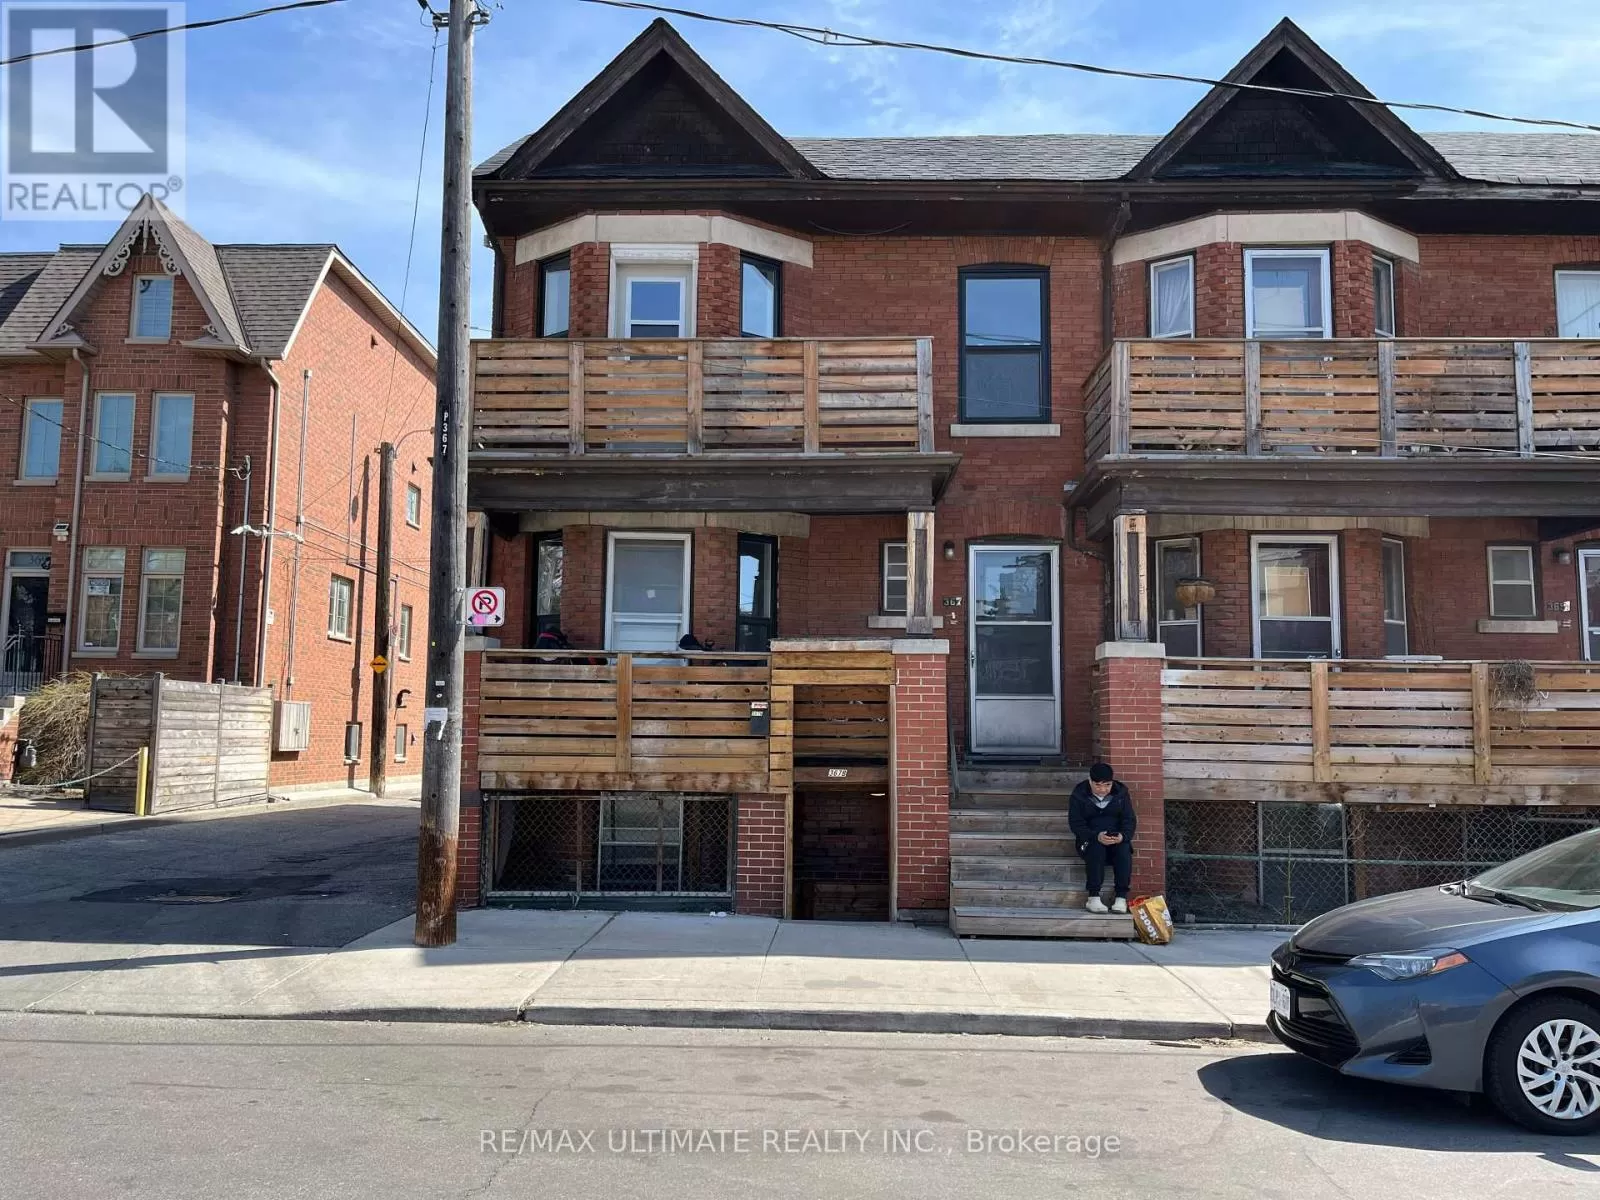 Row / Townhouse for rent: 1 - 367 Clinton Street, Toronto, Ontario M6G 2Z1